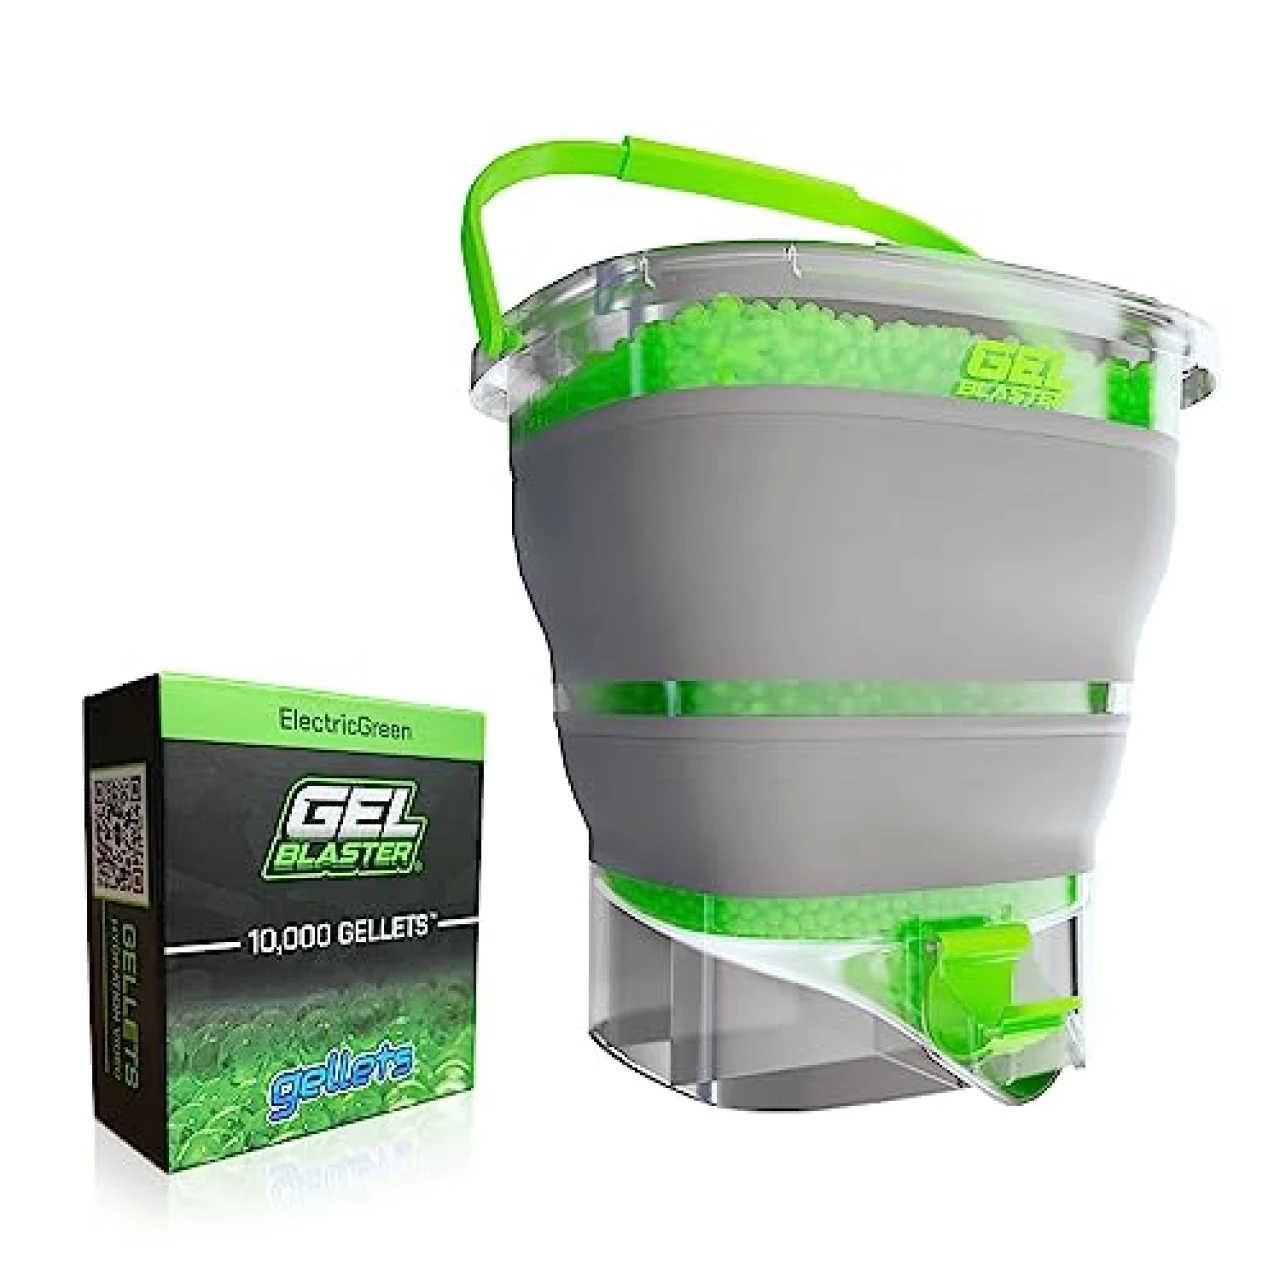 Gel Blaster Gellet Depot with 10,000 Gellets - Collapsible Ammo Tub